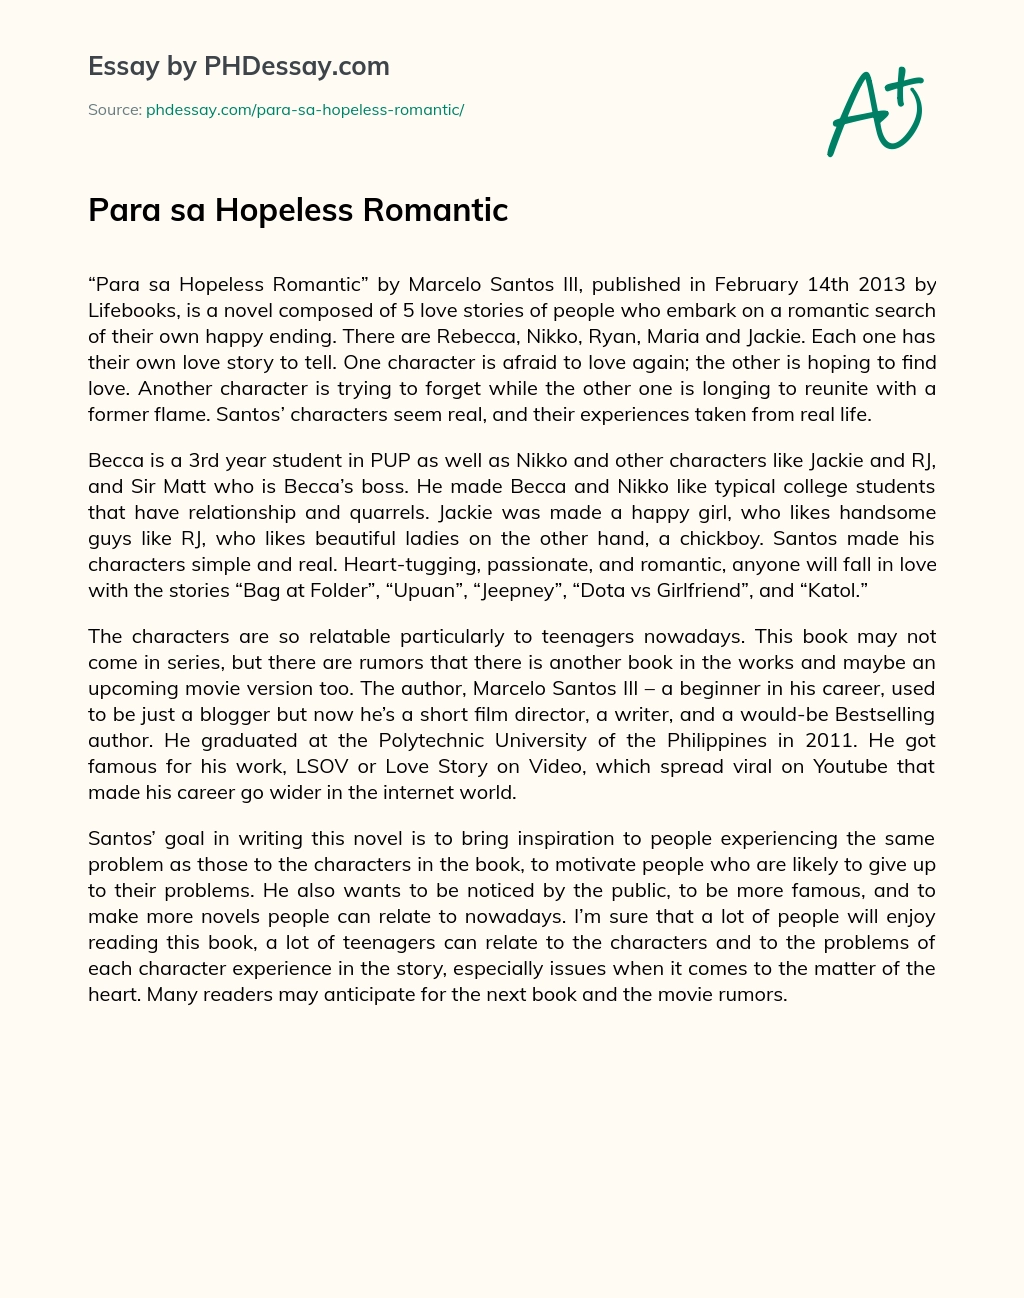 Para sa Hopeless Romantic essay